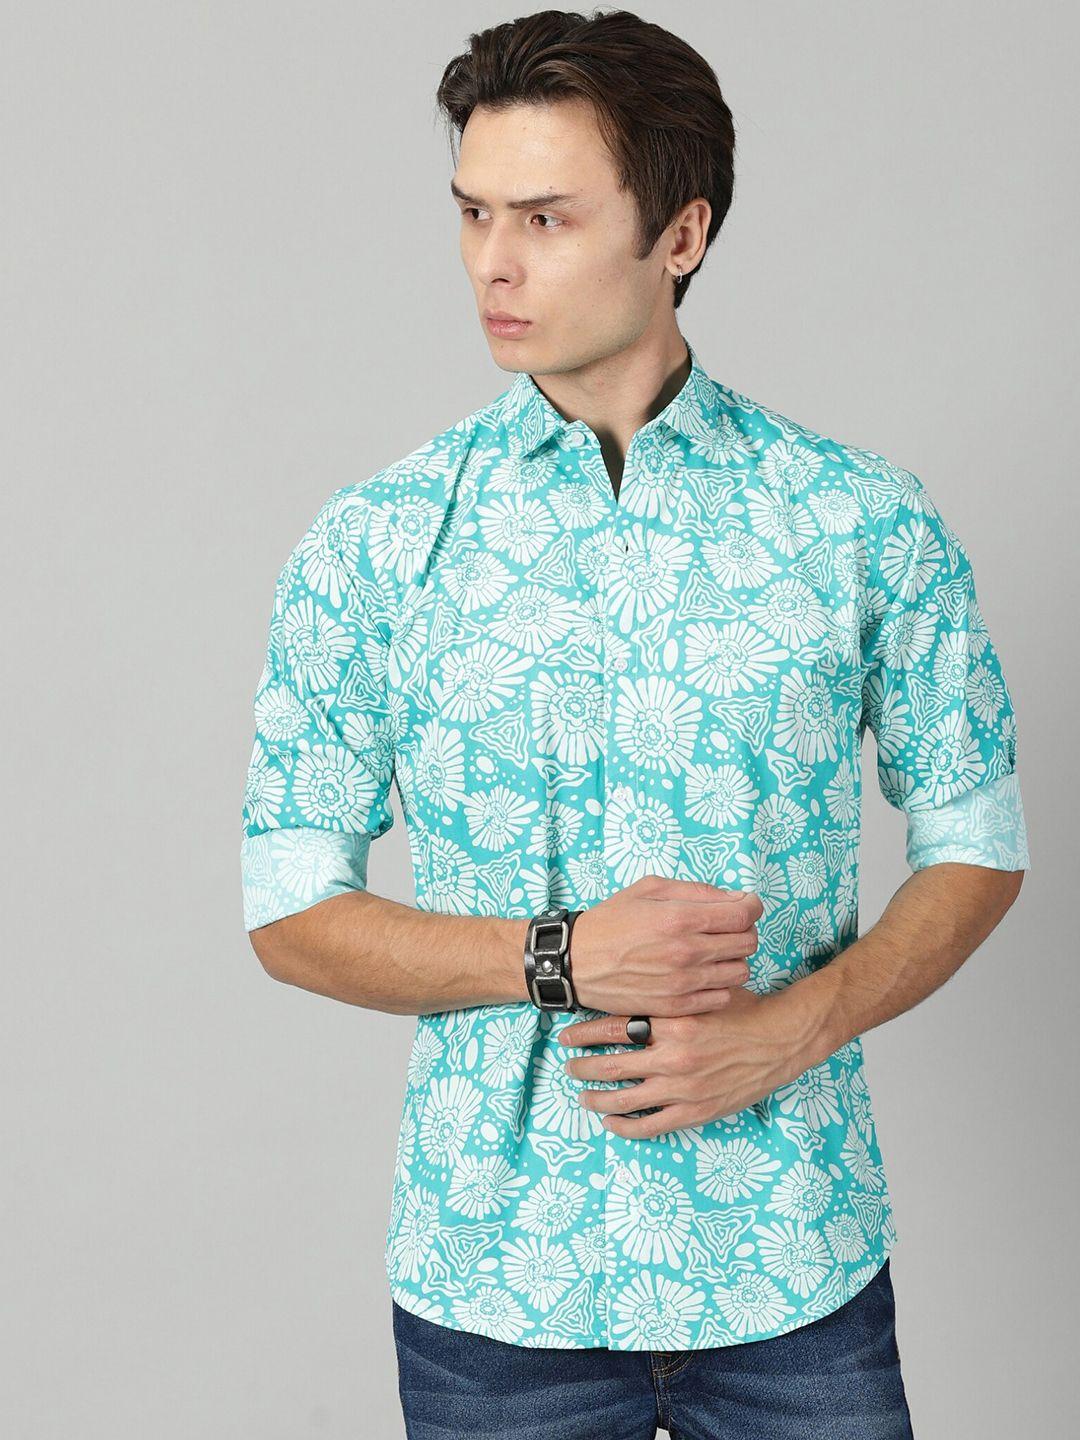 lakaala premium floral printed pure cotton casual shirt